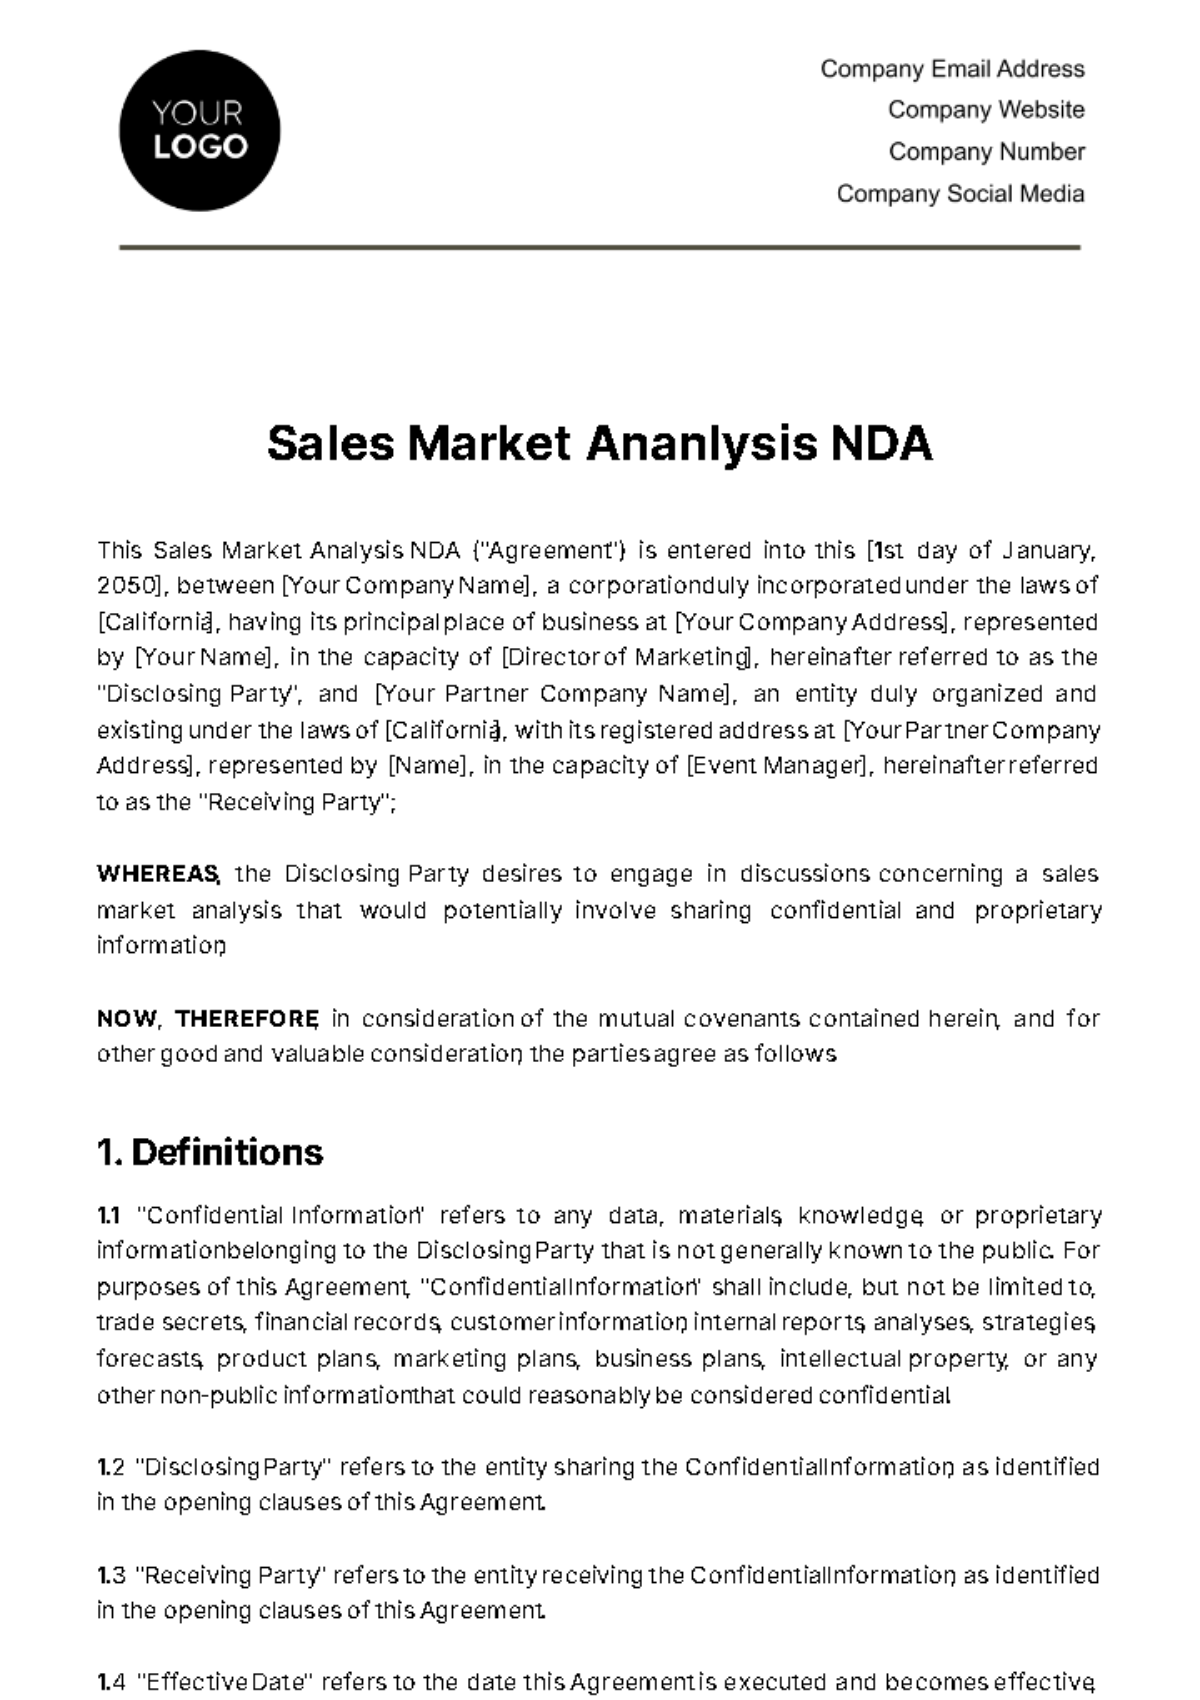 Sales Market Analysis NDA Template